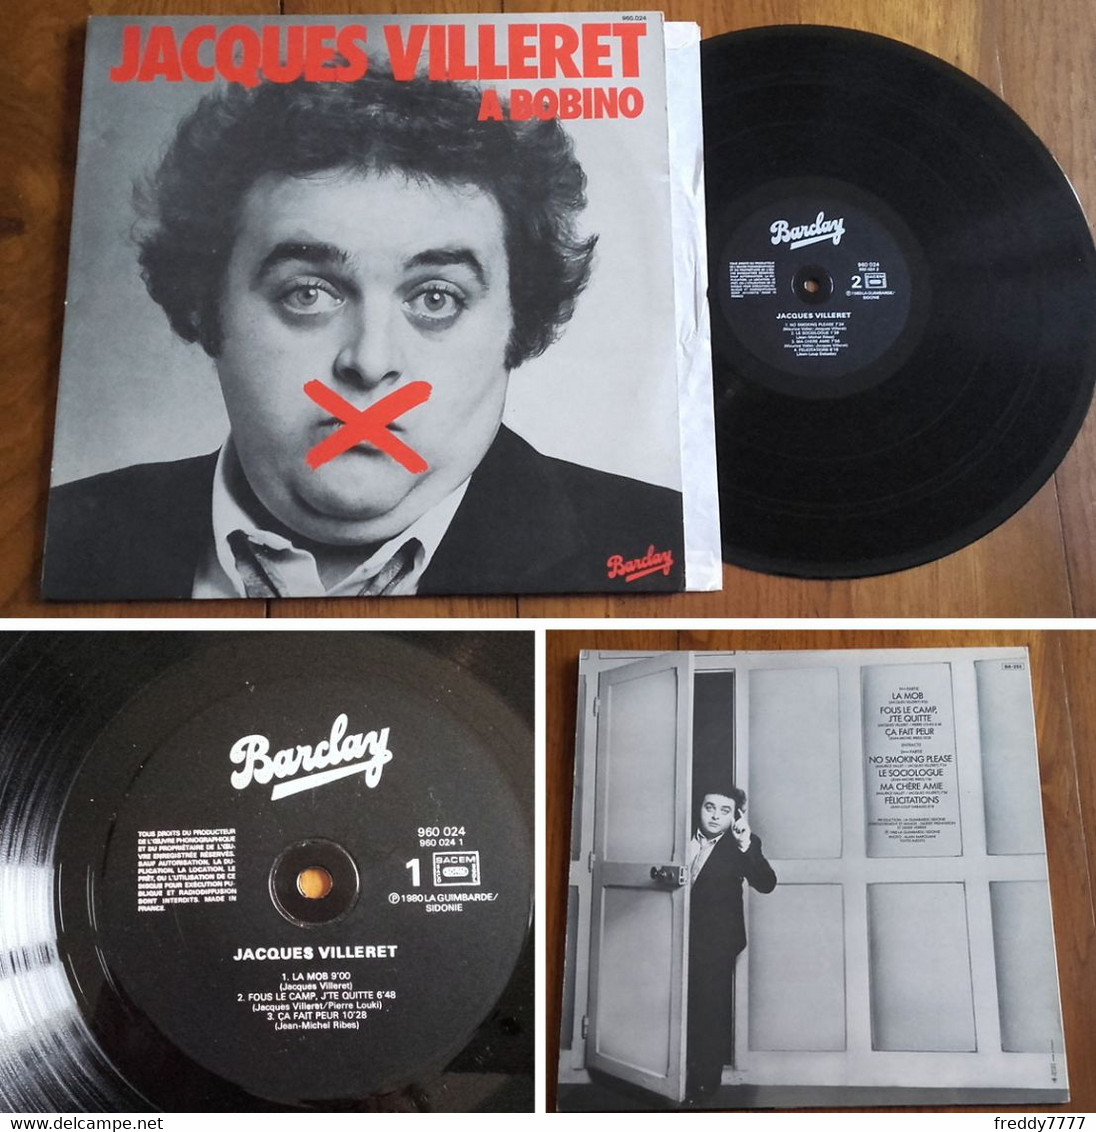 RARE French LP 33t RPM (12") JACQUES VILLERET à BOBINO (1980) - Collector's Editions